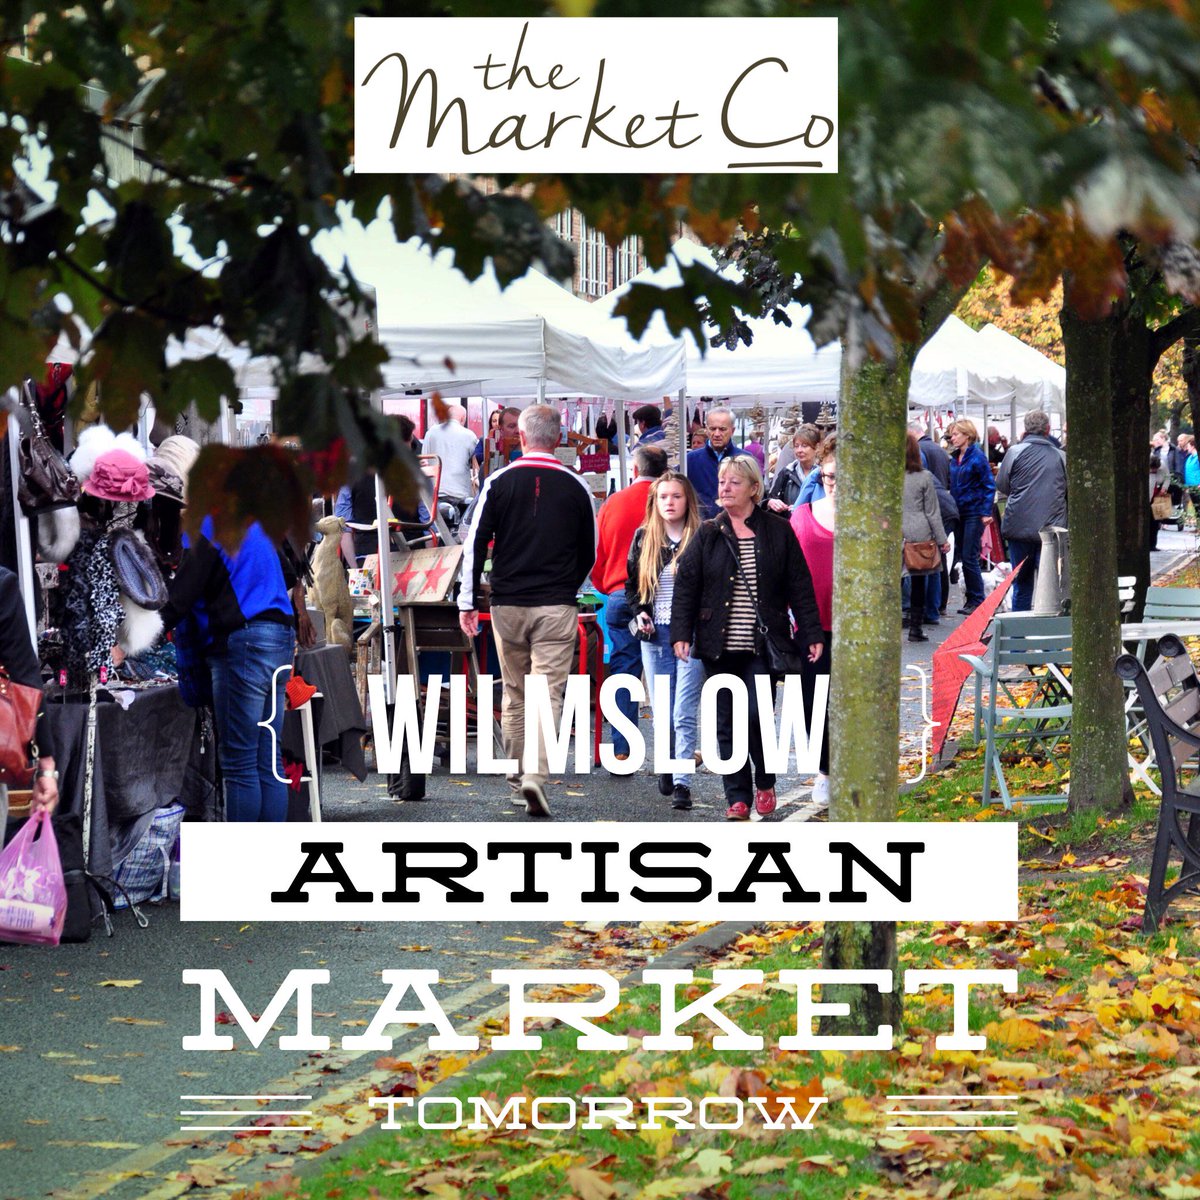 TOMORROW
#Wilmslow Artisan Market #Cheshire
#GreatGetTogether
#Artisans
#LiveMusic
#WillowWorkshop
#FamilyBikeRide
#CommunityUnited